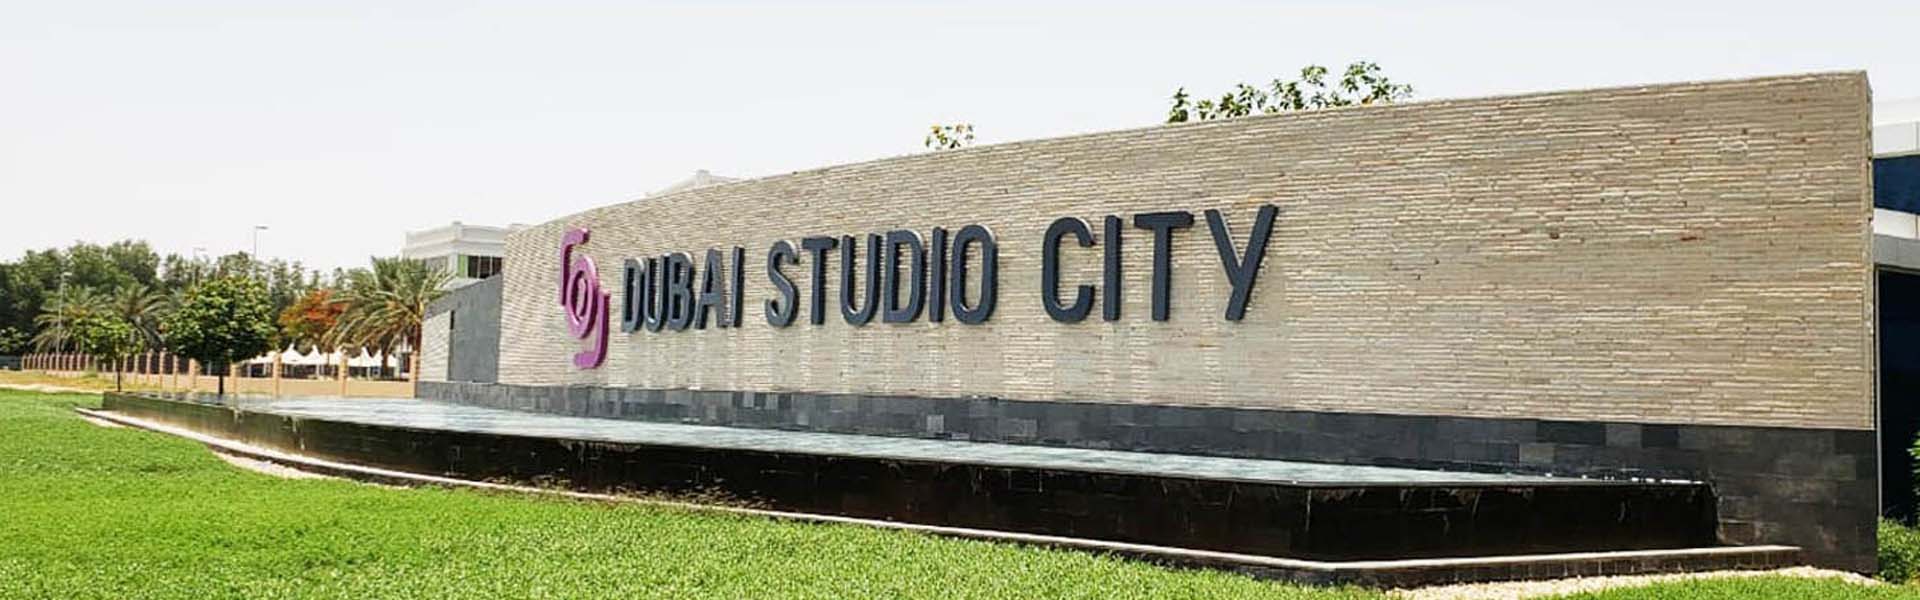 Rent a Car Dubai Studio City